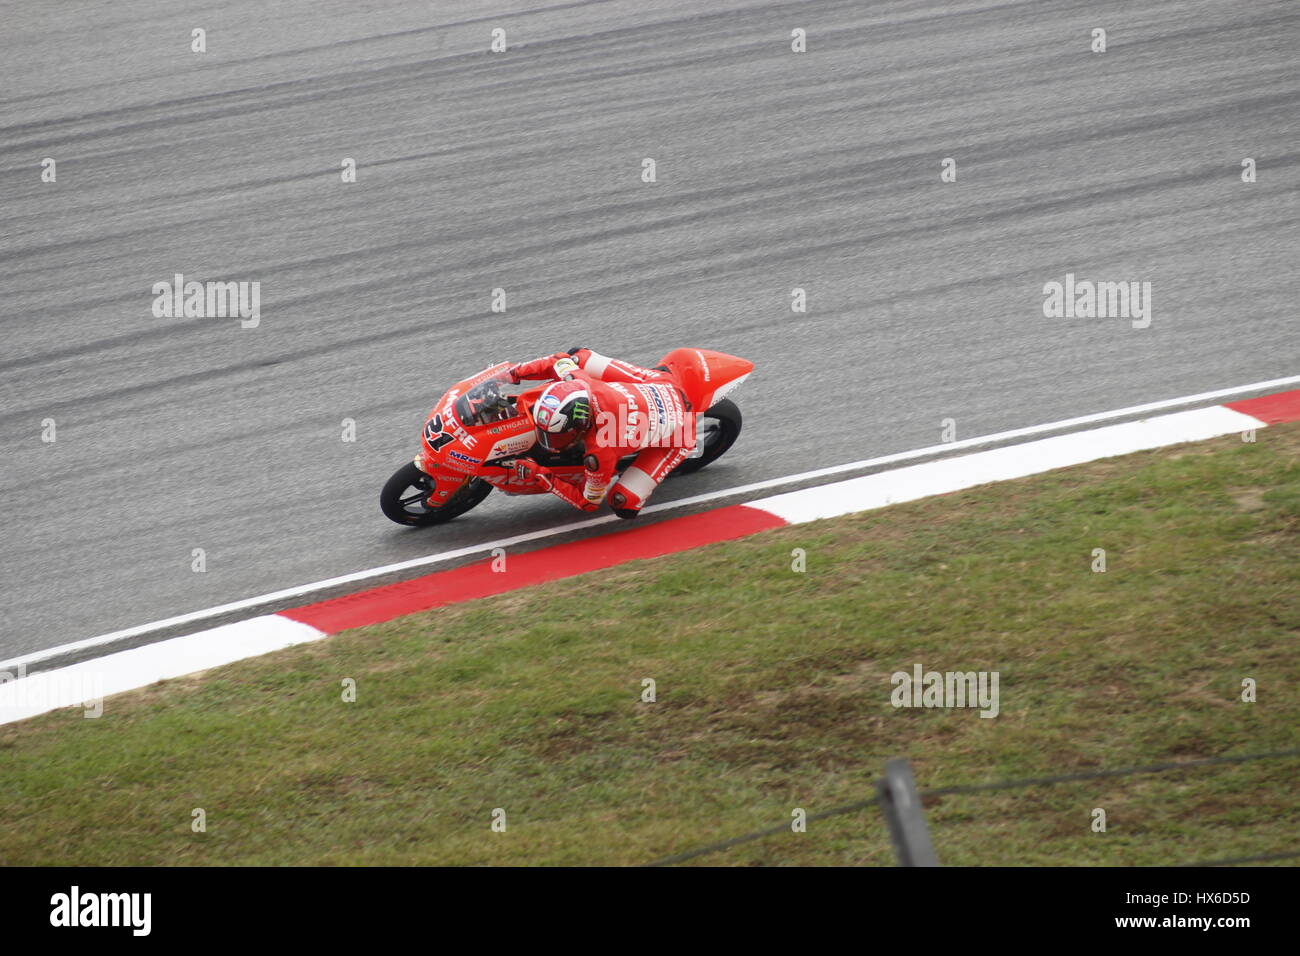 motor sports bike racing driver Stock Photo